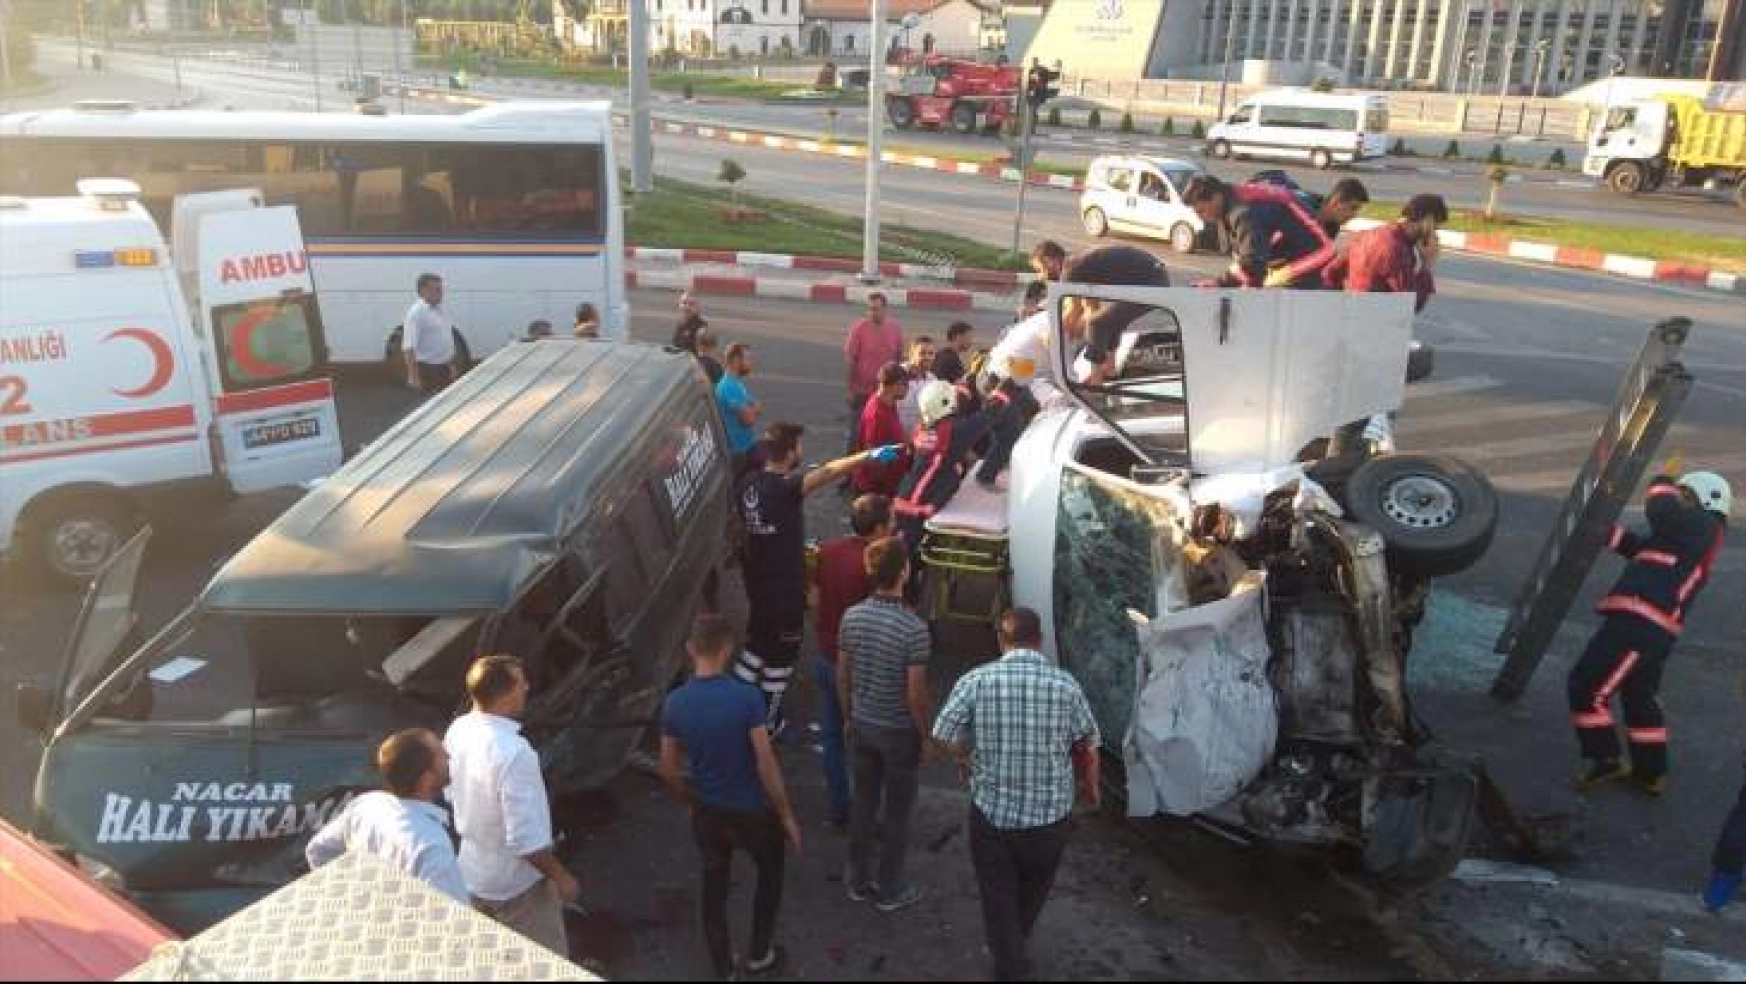 Malatya'da iki minibüs çarpıştı: 12 yaralı